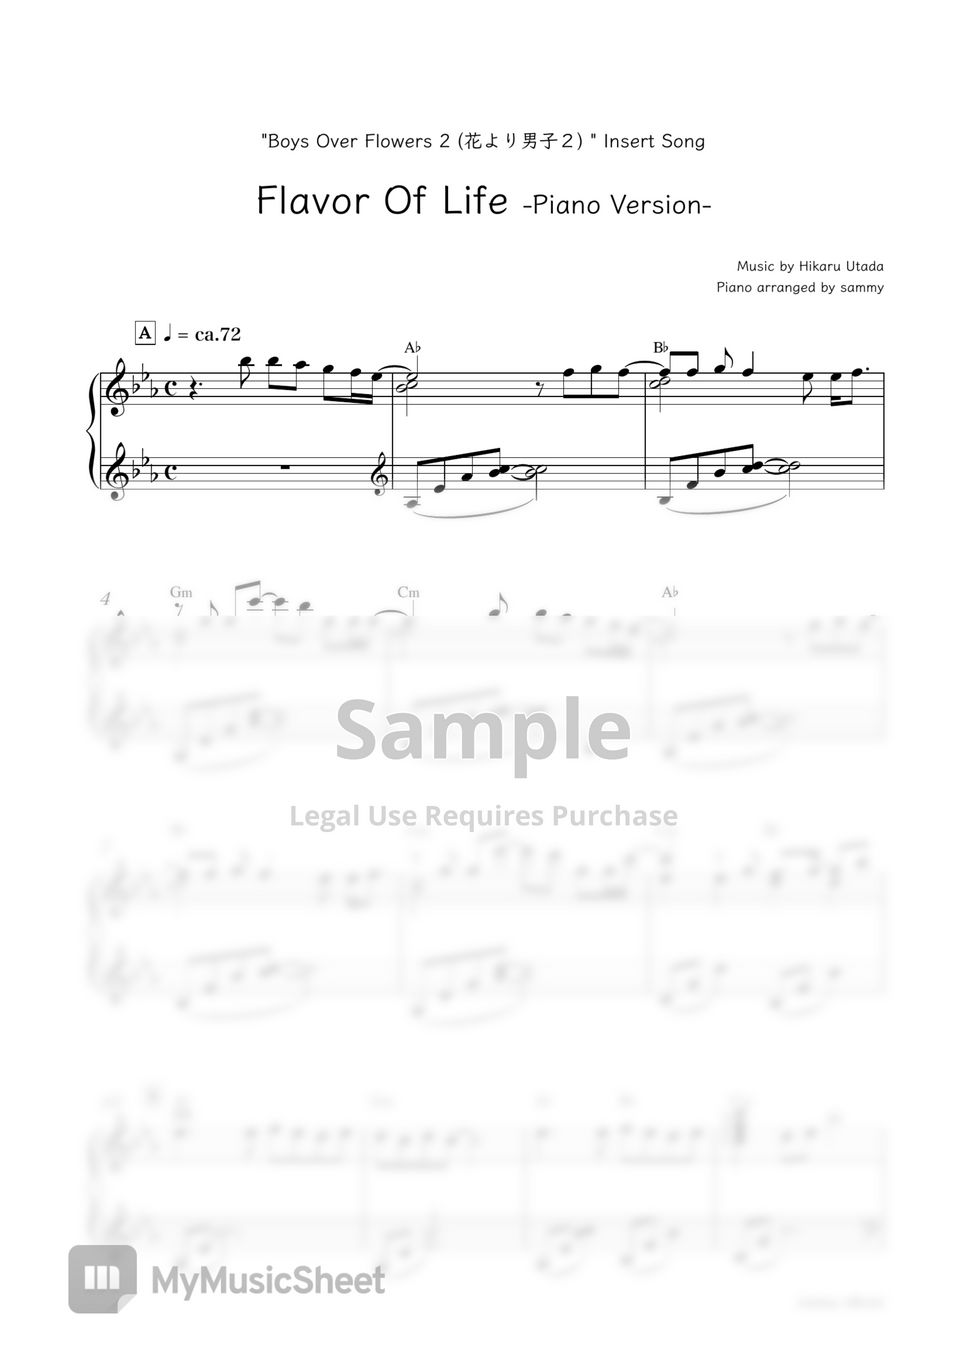 Hikaru Utada（宇多田ヒカル） - Flavor Of Life -Piano Version- by sammy